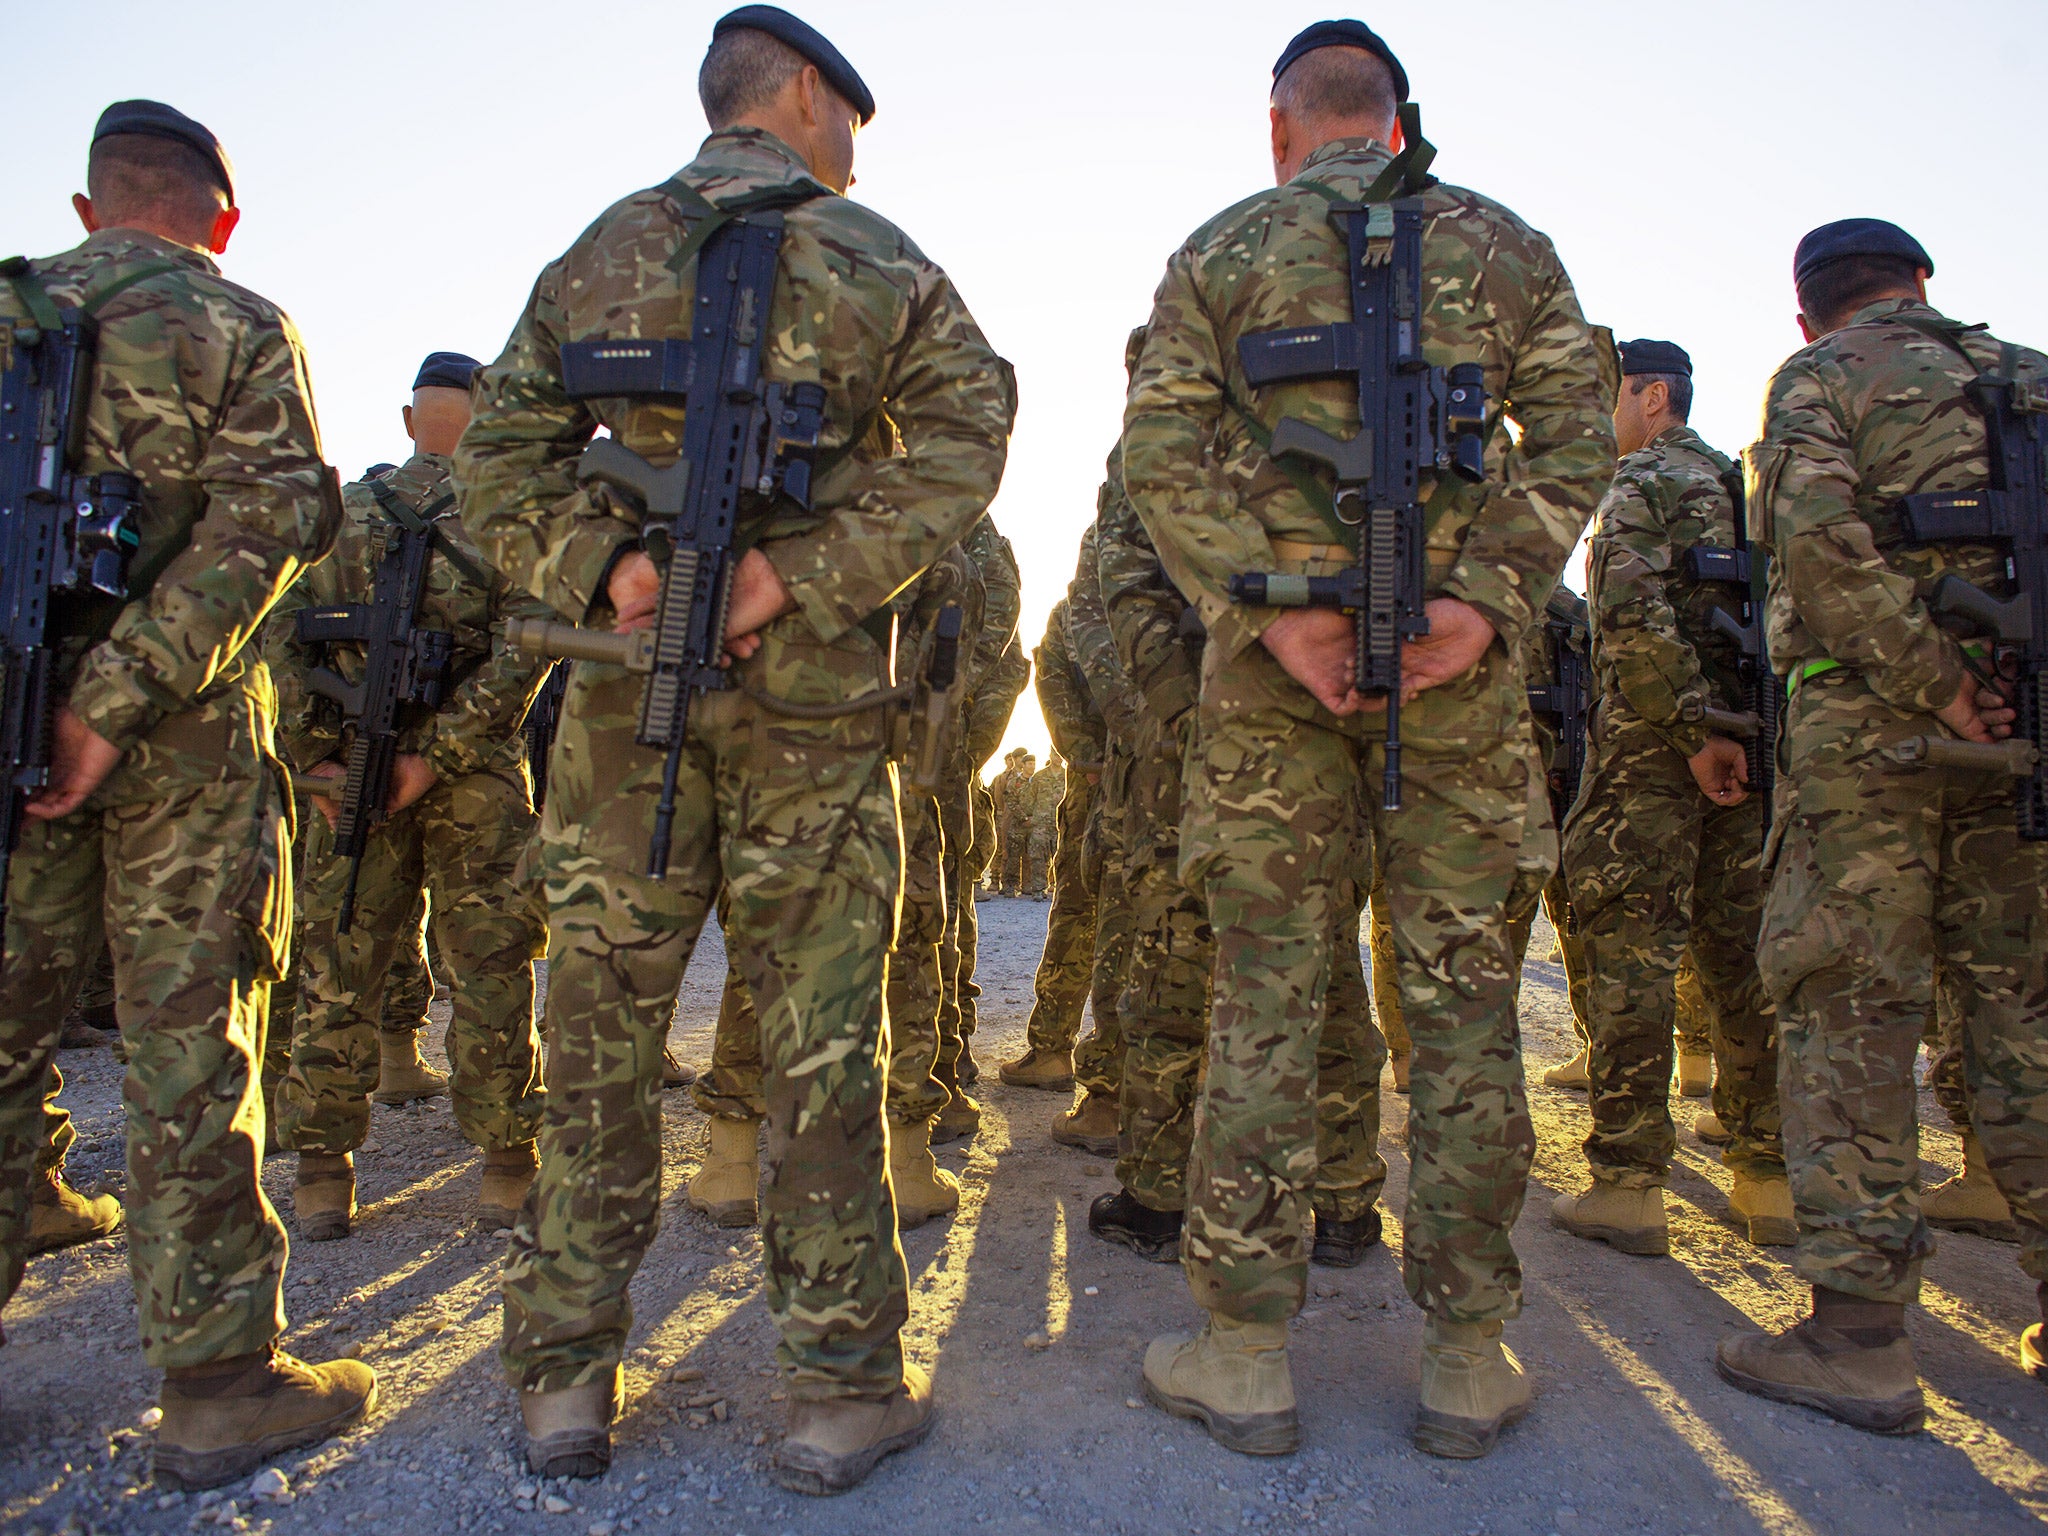 British troops in Afghanistan. File photo